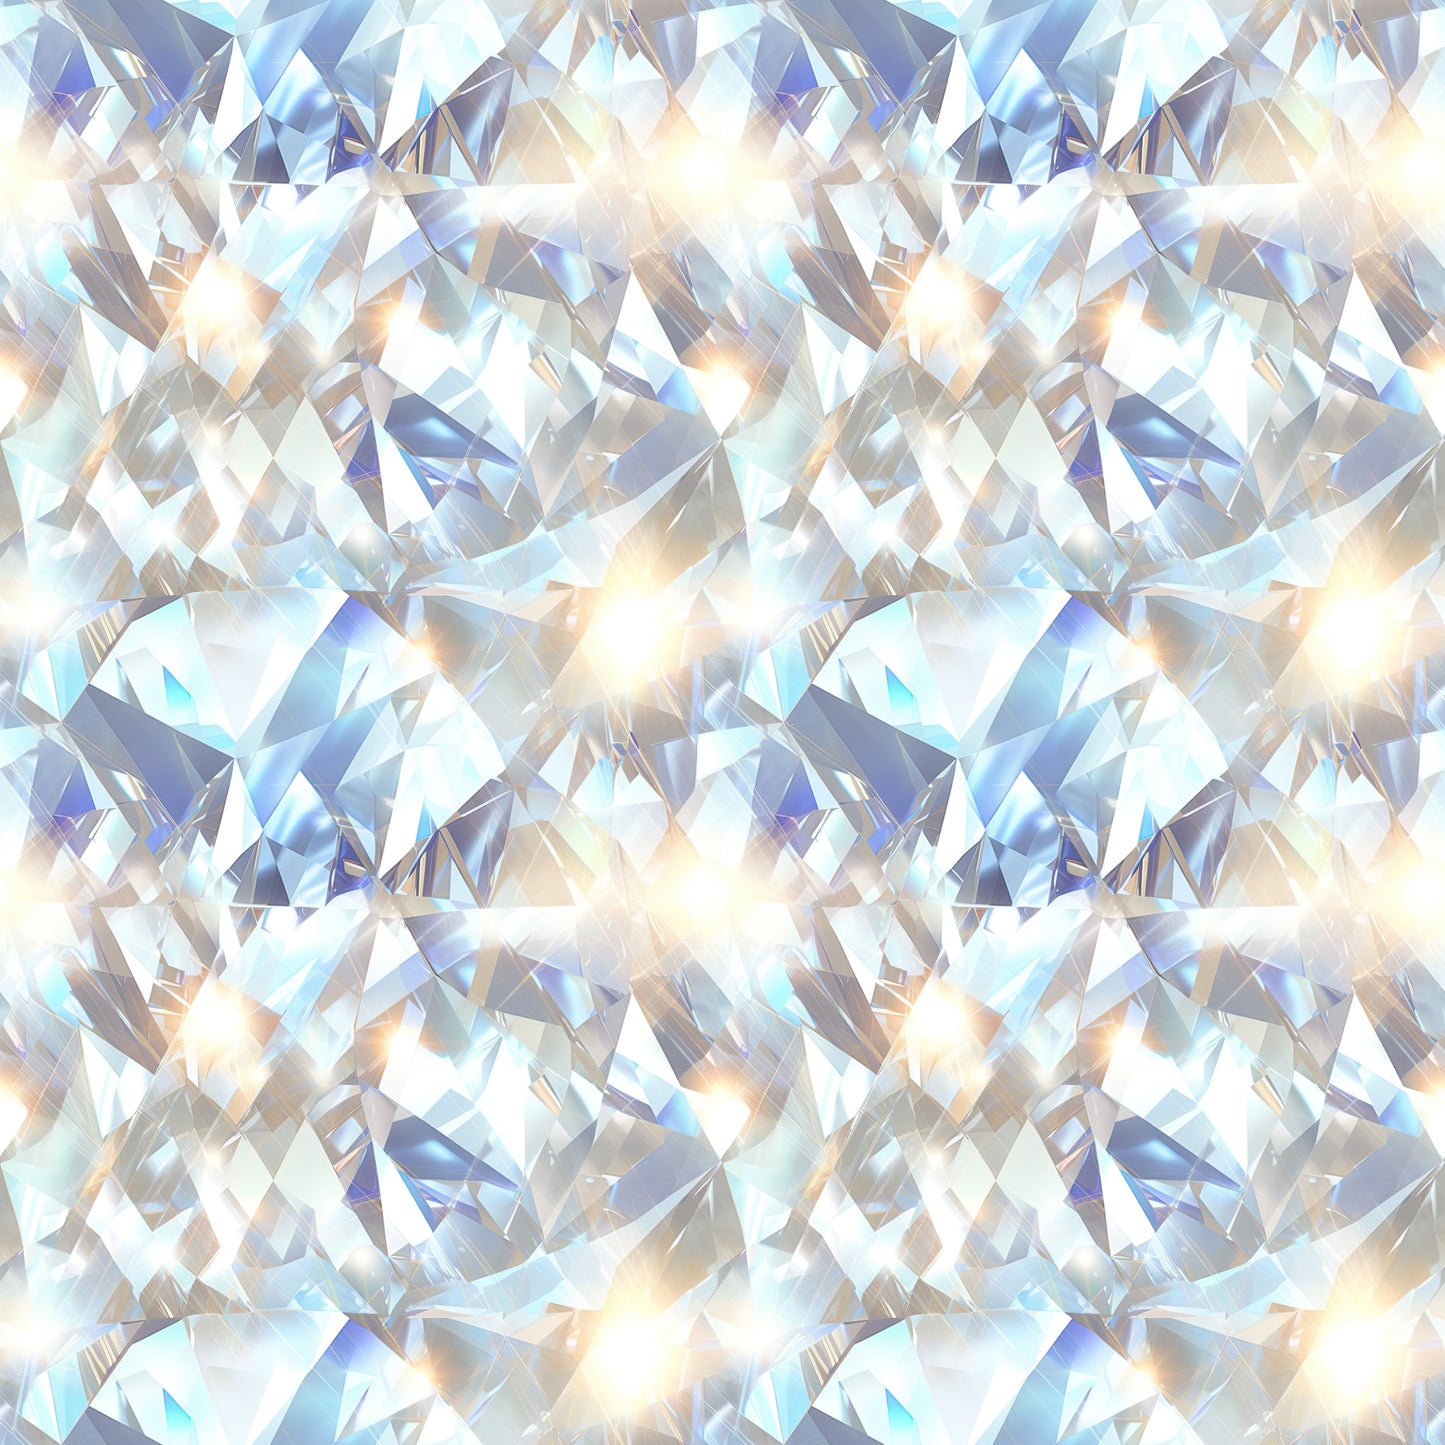 DIAMONDS VINYL - MULTIPLE VARIATIONS